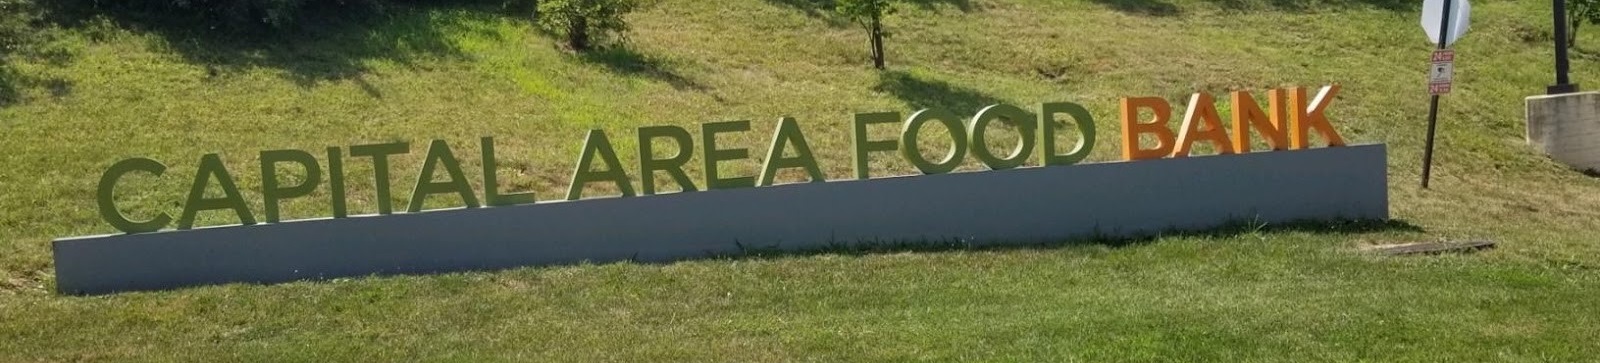 Capital Area food bank sign